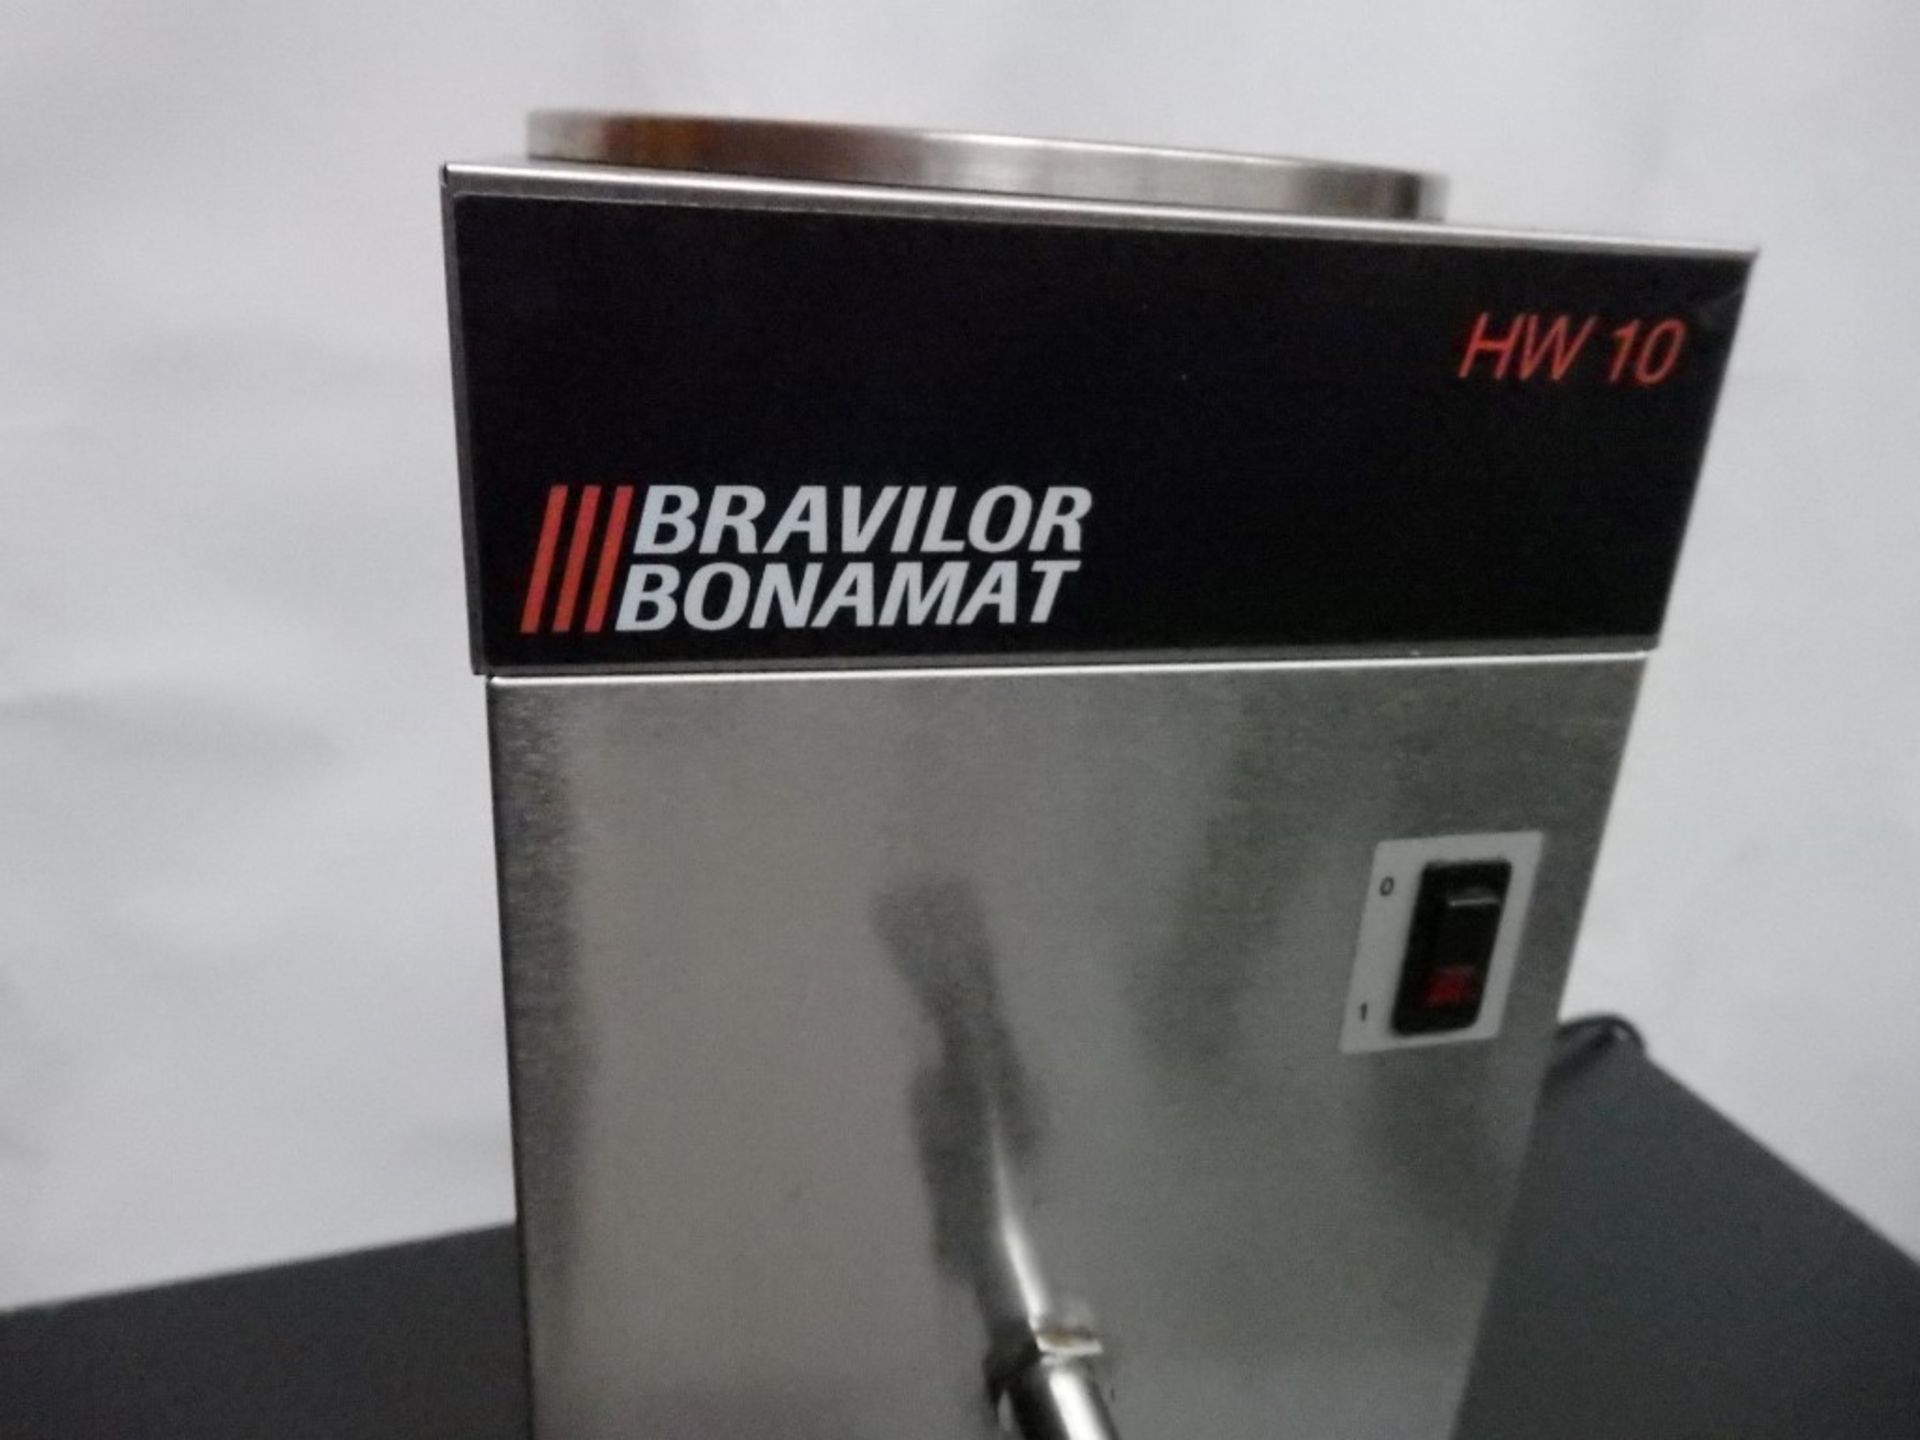 1 x Bravilor HW10 Commercial Hot Water Dispenser 2Ltr - Dimensions 43(H) x 20.5(W) x 35.5(D)cm - - Image 2 of 7